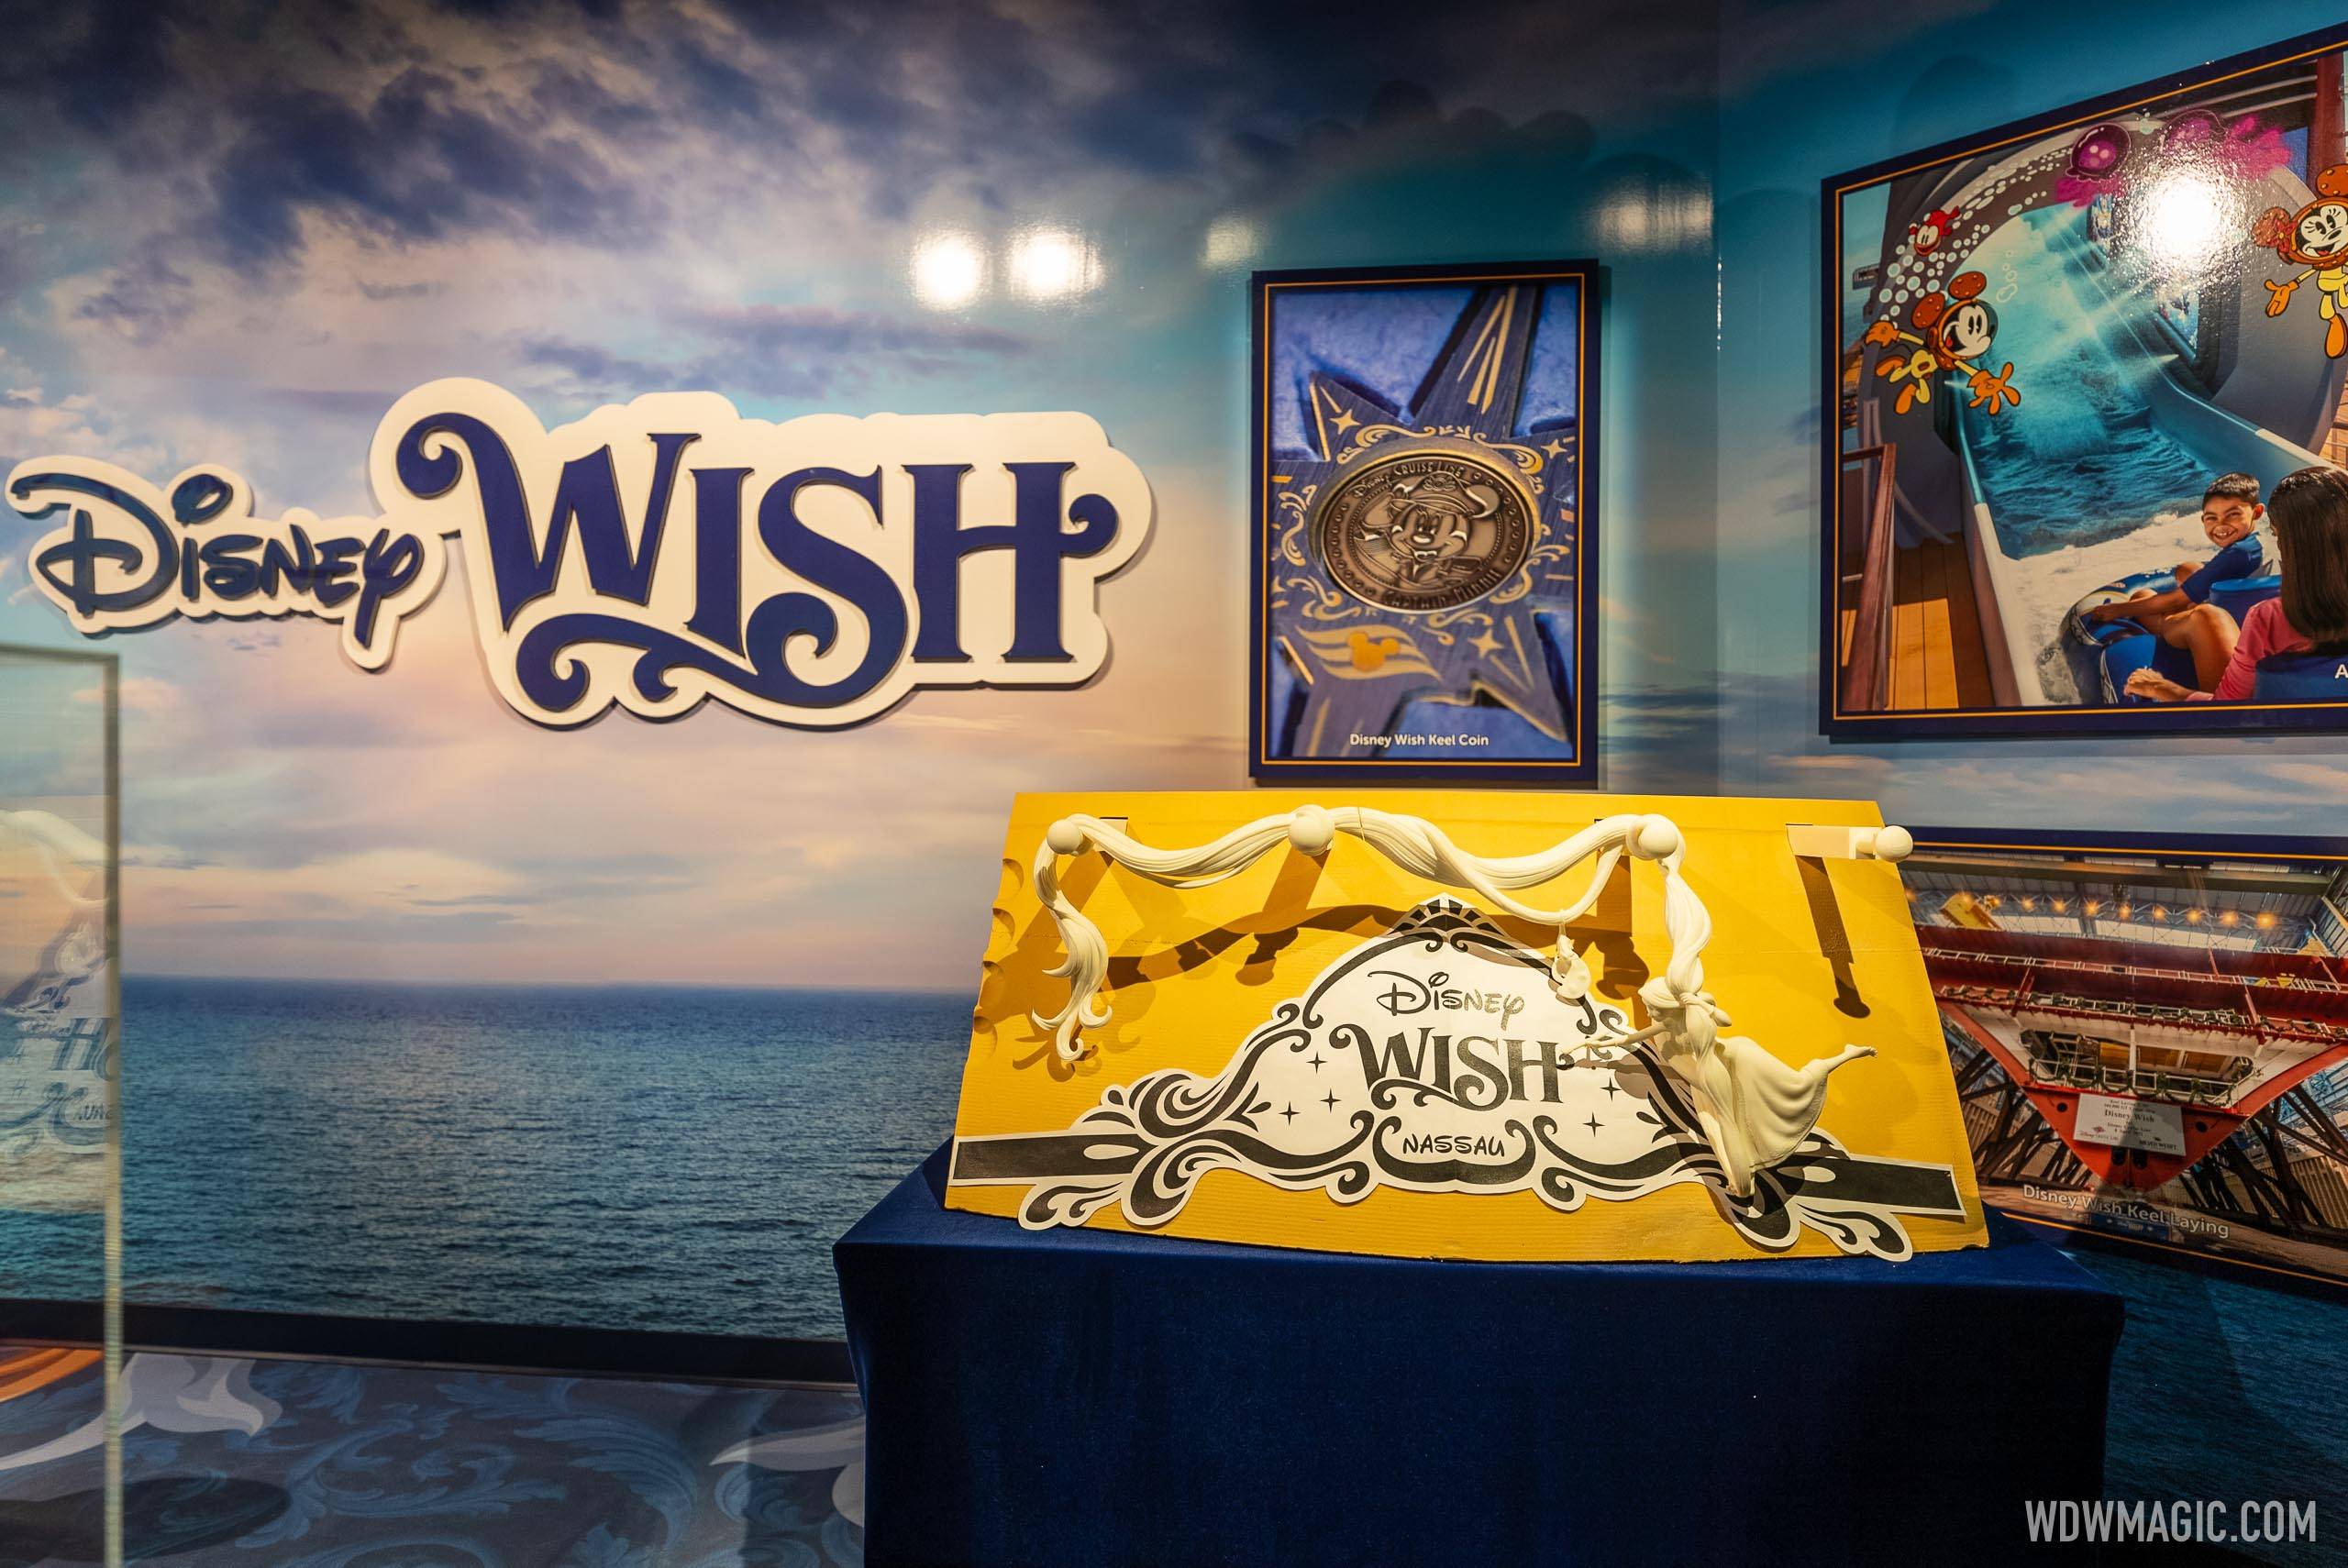 Disney Wish exhibit at Walt Disney Presents